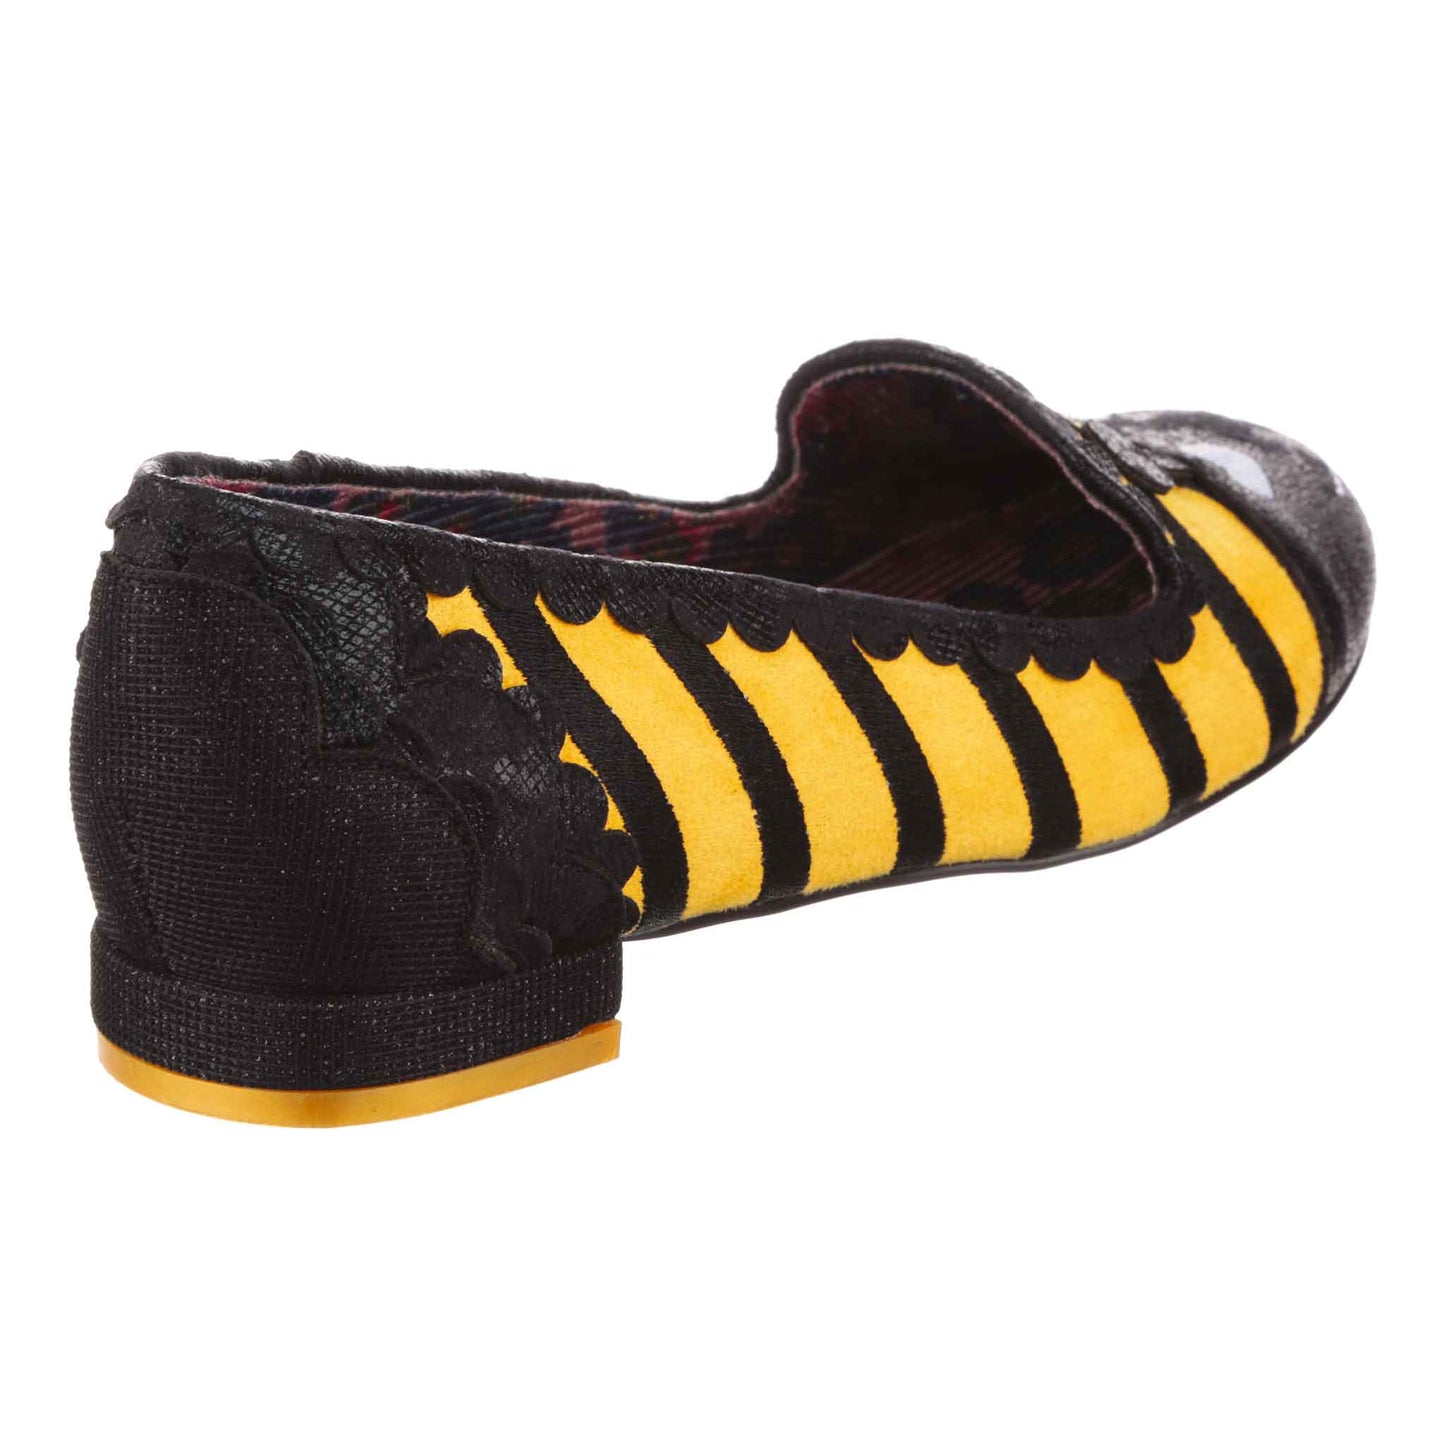 Irregular Choice Women's 4329-92 Bug It Up Flat Shoes Black/Yellow